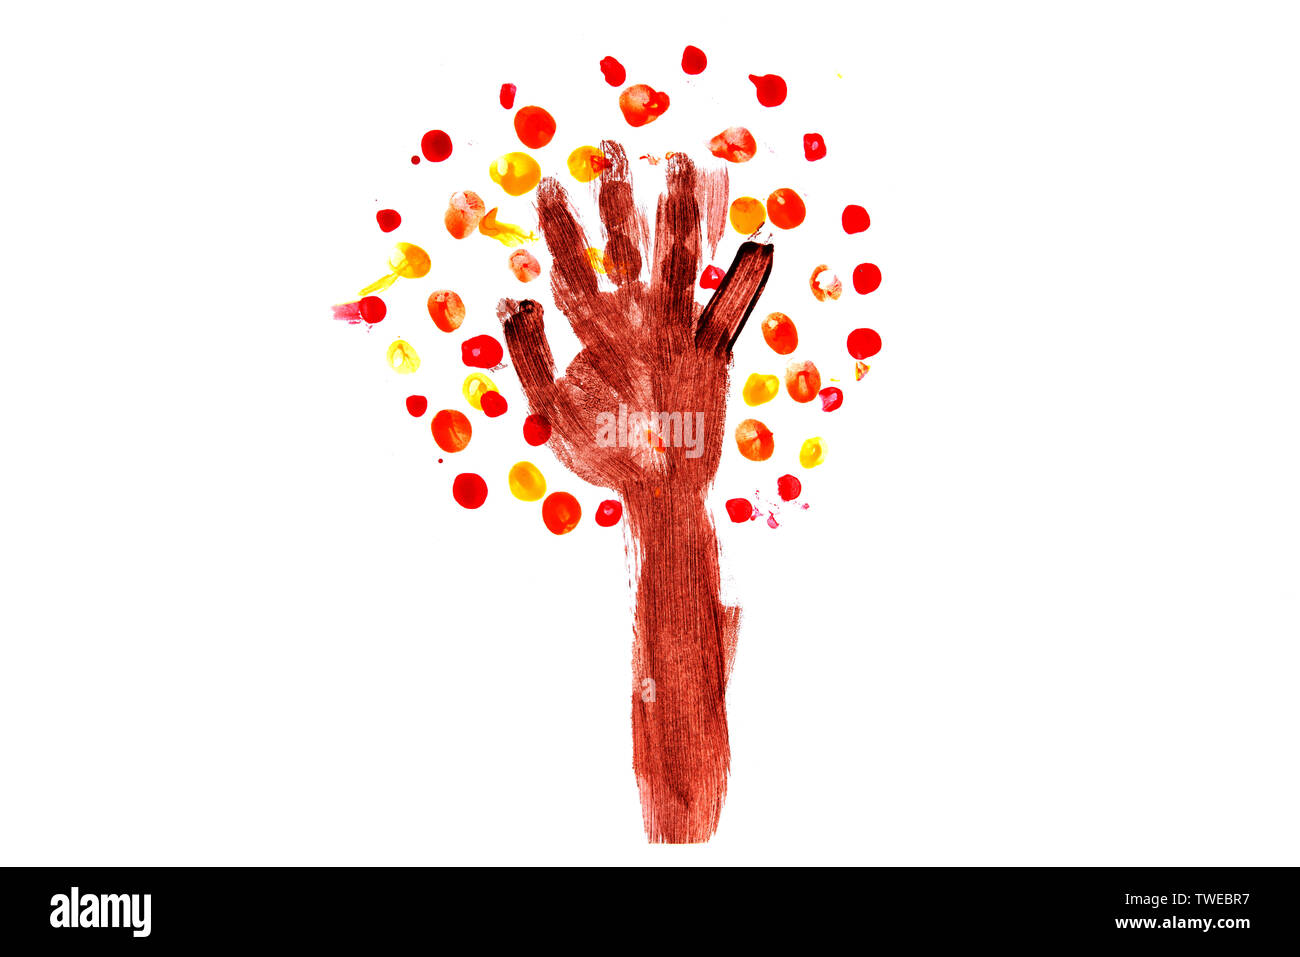 Child artwork, hand printed tree on plain background. Stock Photo